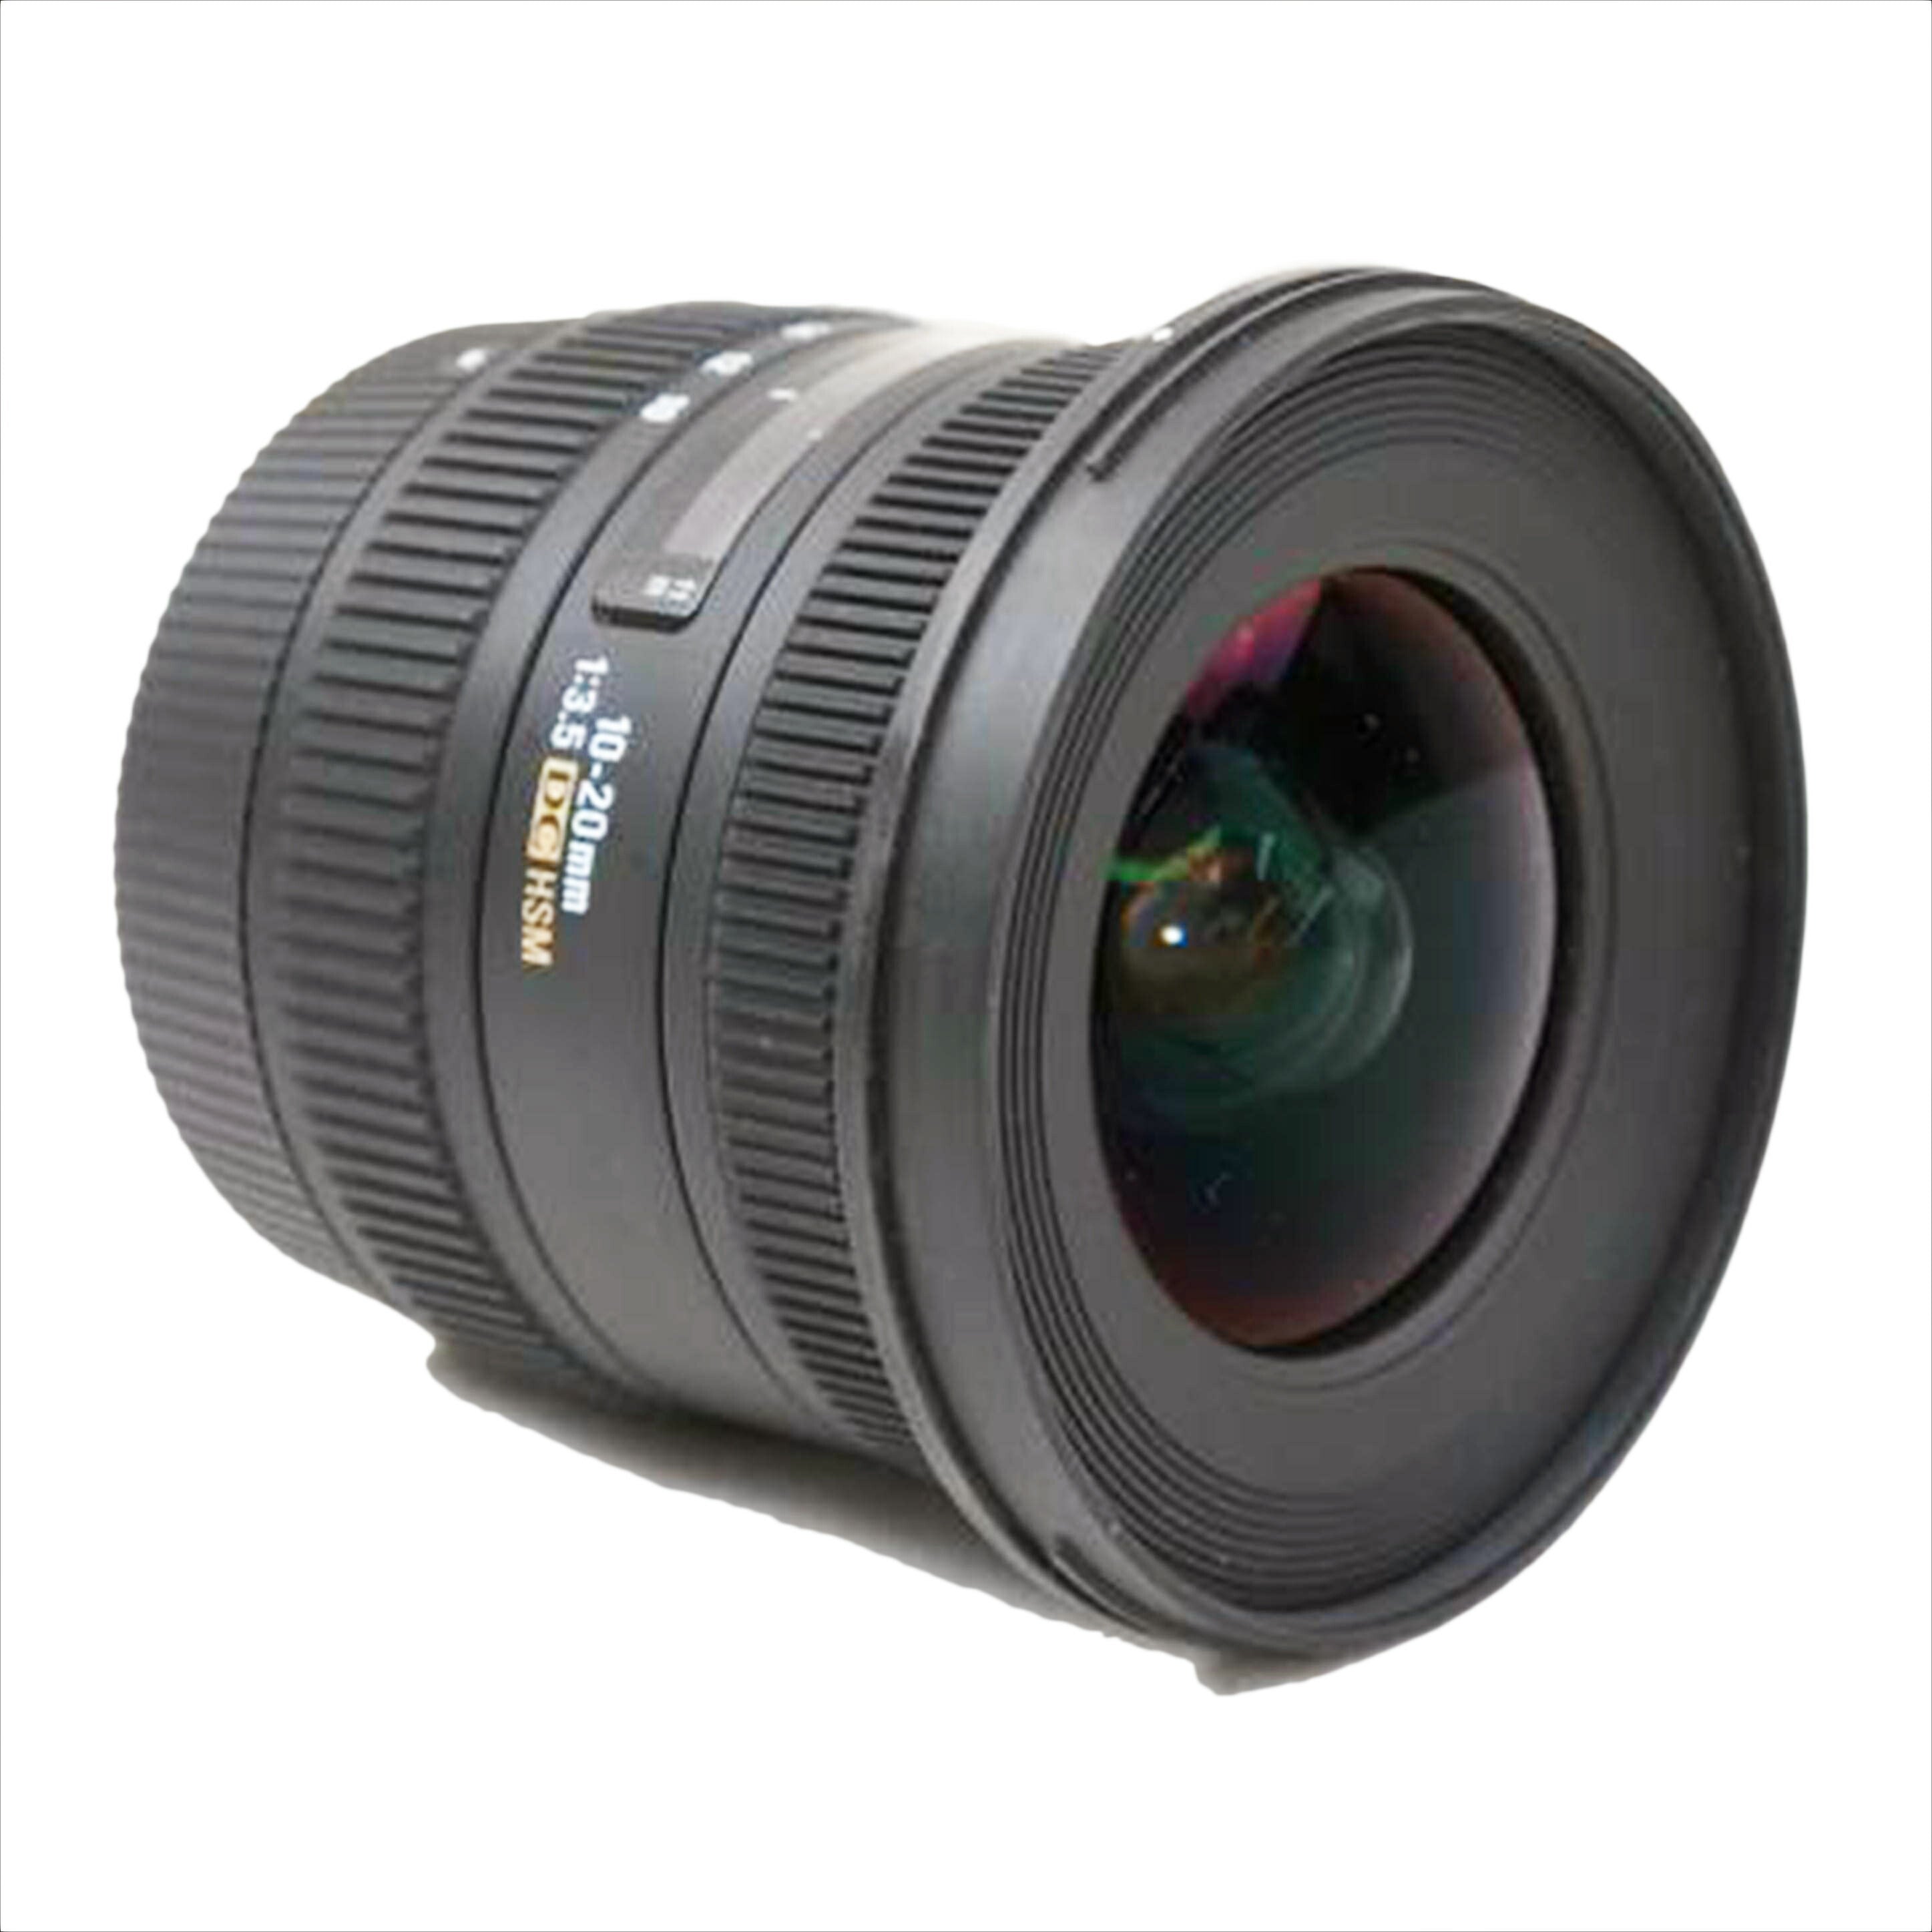 <br>SIGMA シグマ/デジタル対応レンズ/10-20mm F3.5 EX DC HSM/15963727/交換レンズ/ABランク/67